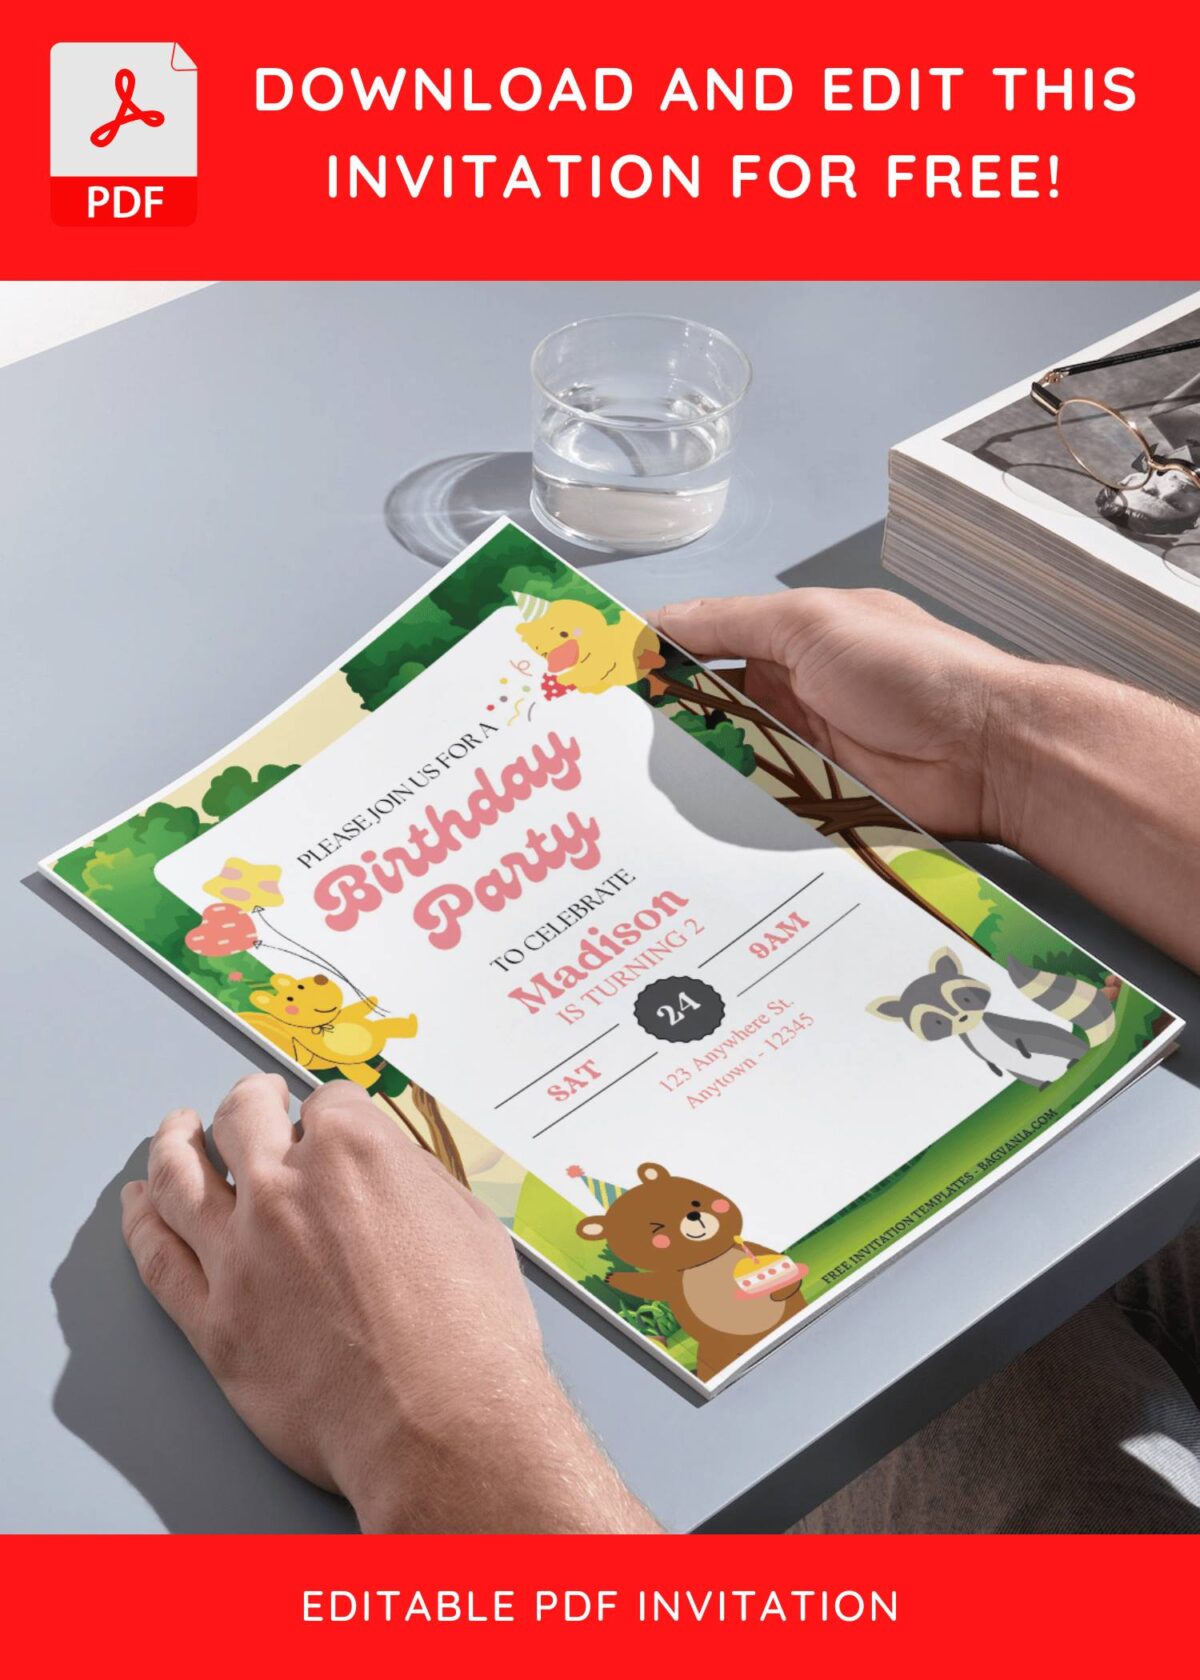 (Free Editable PDF) Adorable Jungle Themed Birthday Invitation Templates For Kids